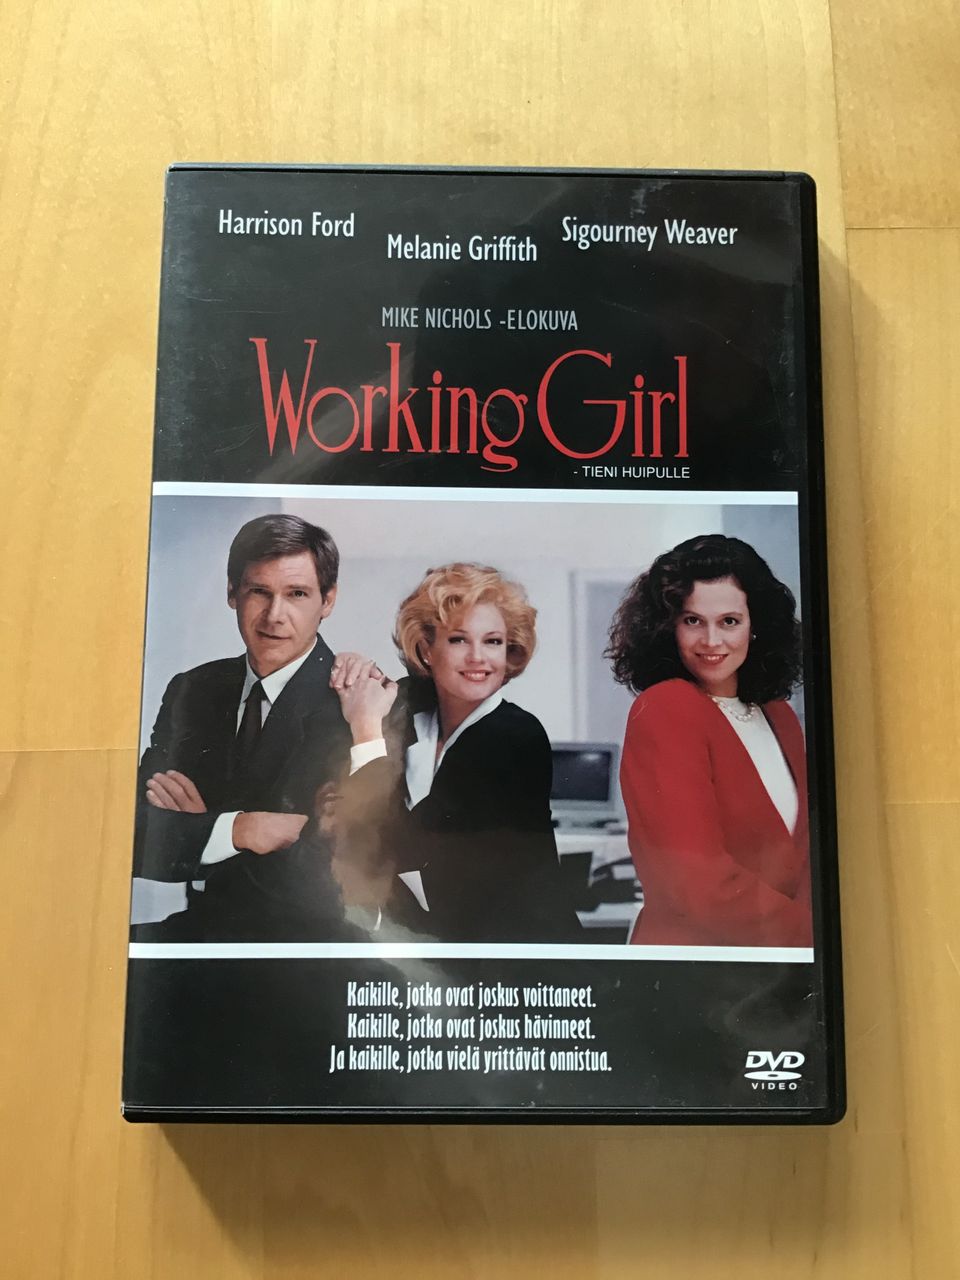 Working Girl - Tieni huipulle DVD